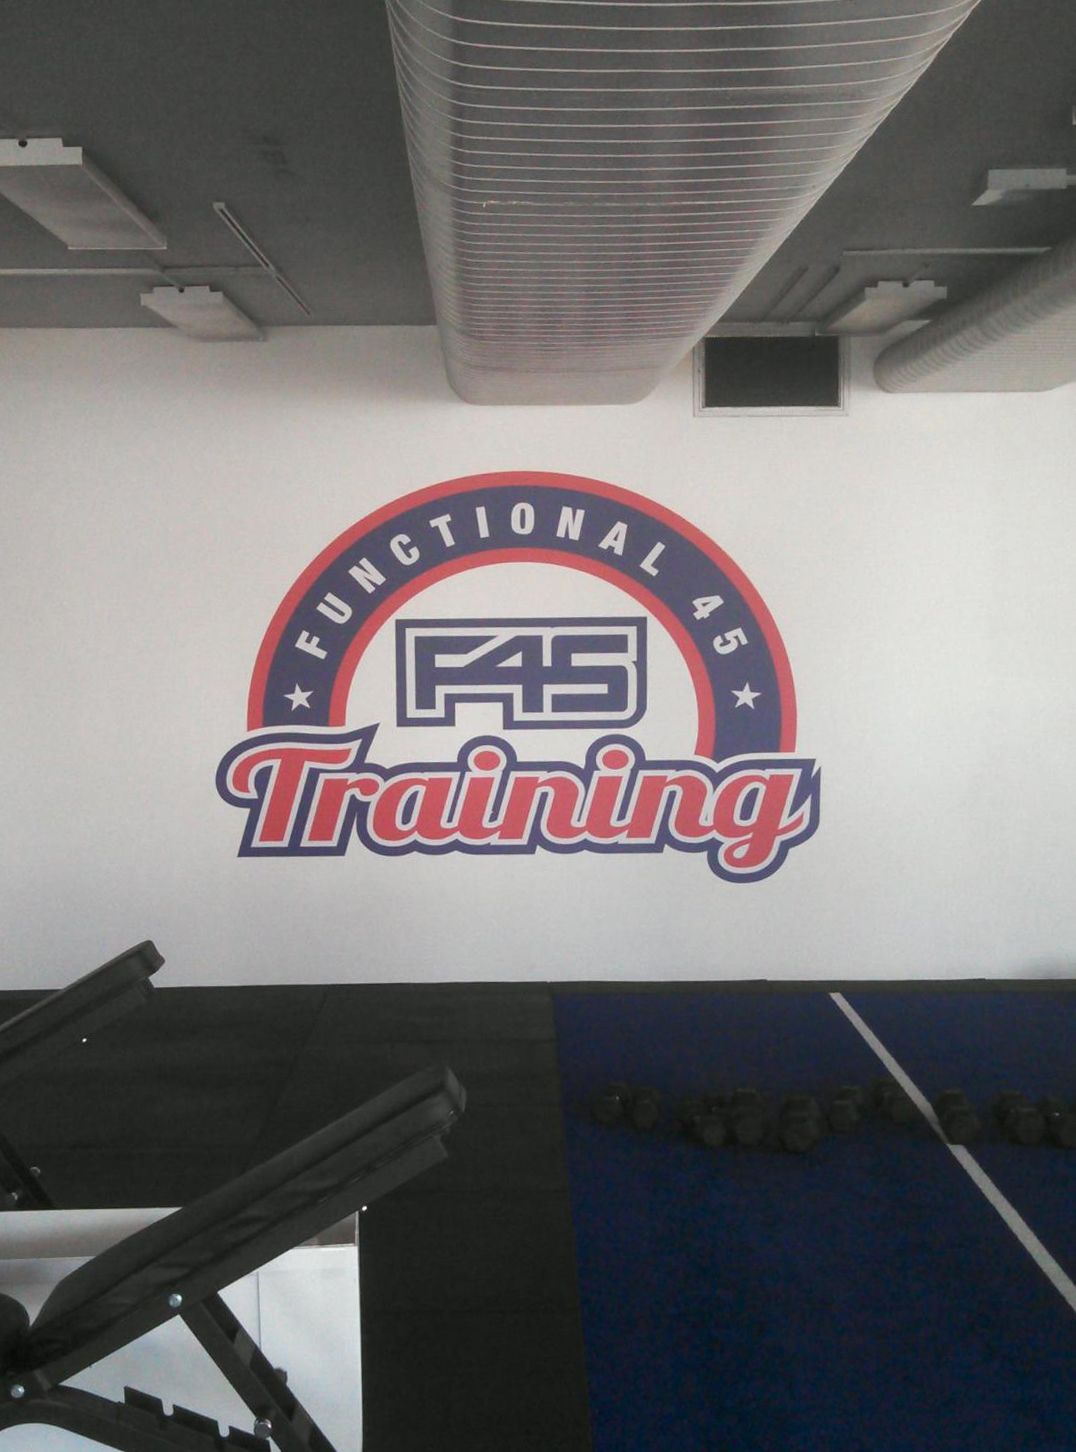 F45 training wallpaper wall graphic